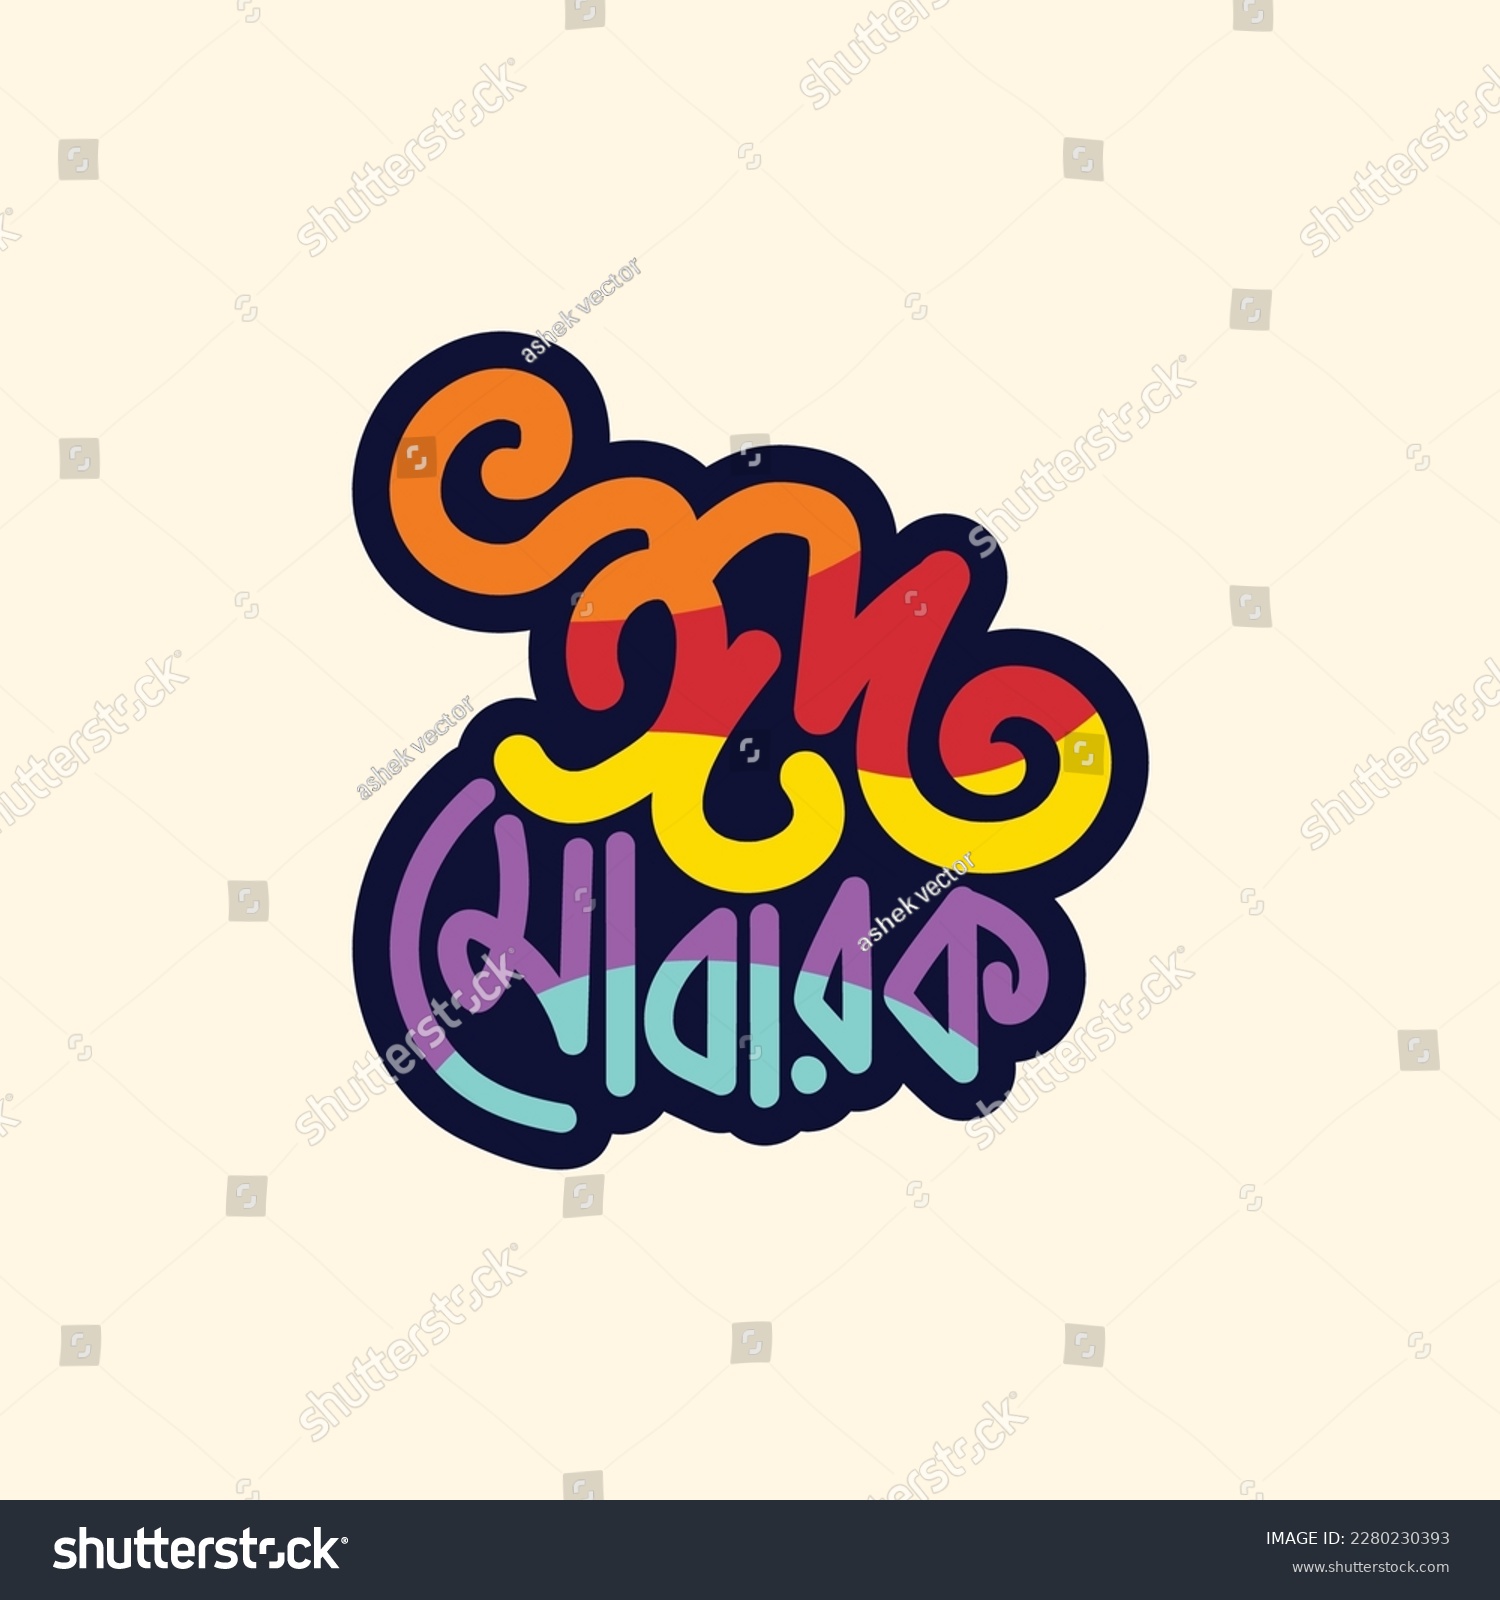 SVG of Colorful Eid Mubarak Bangla typography. Eid ul Adha vector illustration. Religious holiday celebrated by Muslims worldwide. 
Eid Mubarak greeting card lettering design. Arabic style Bengali typography svg